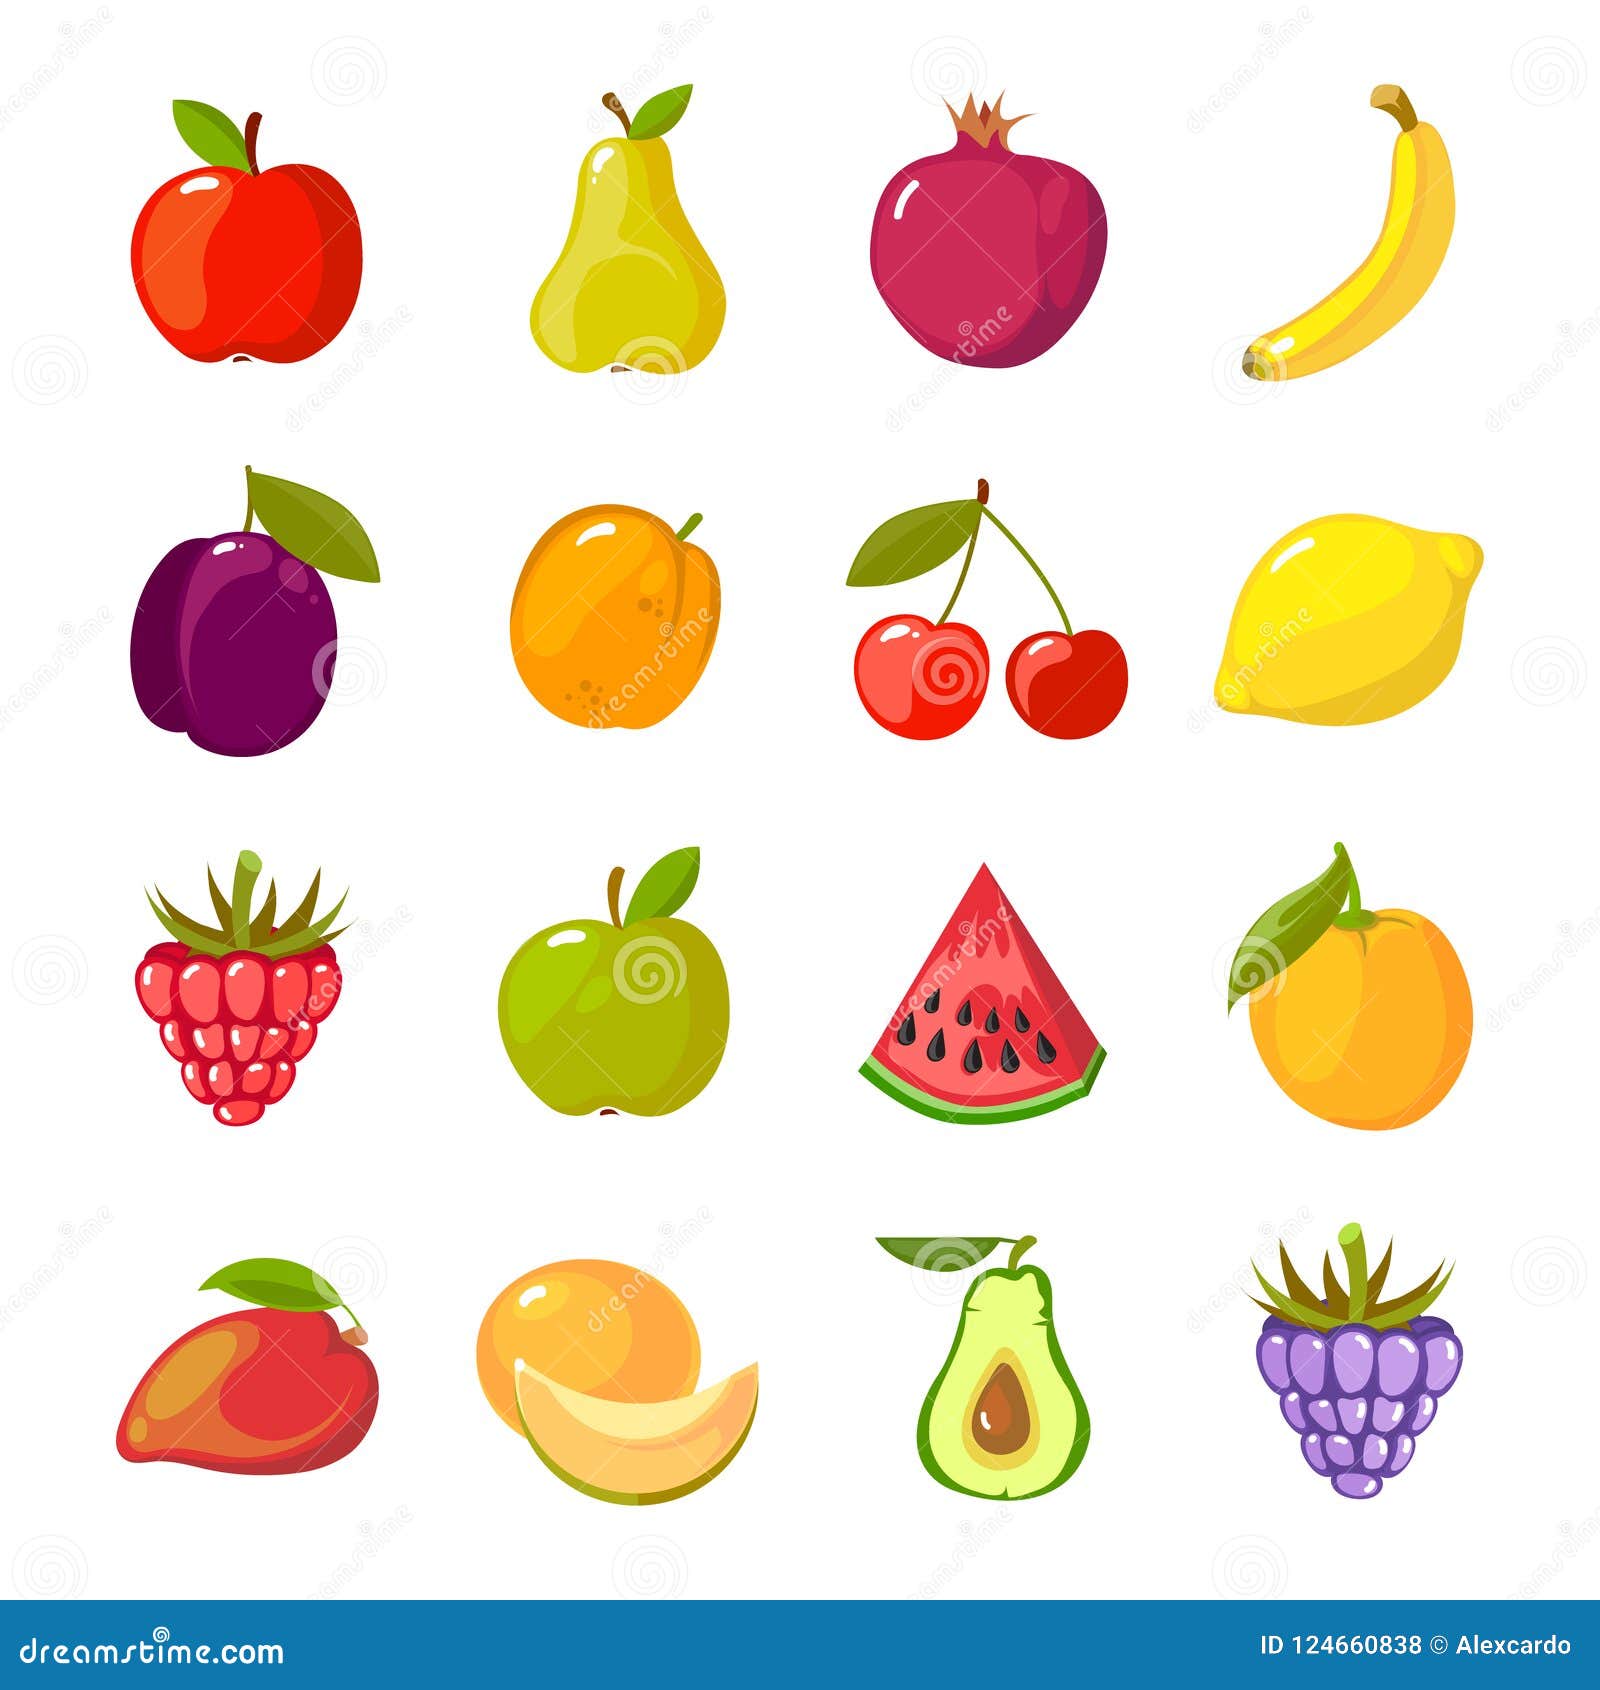 fruits cartoon set. fresh healthy food apples